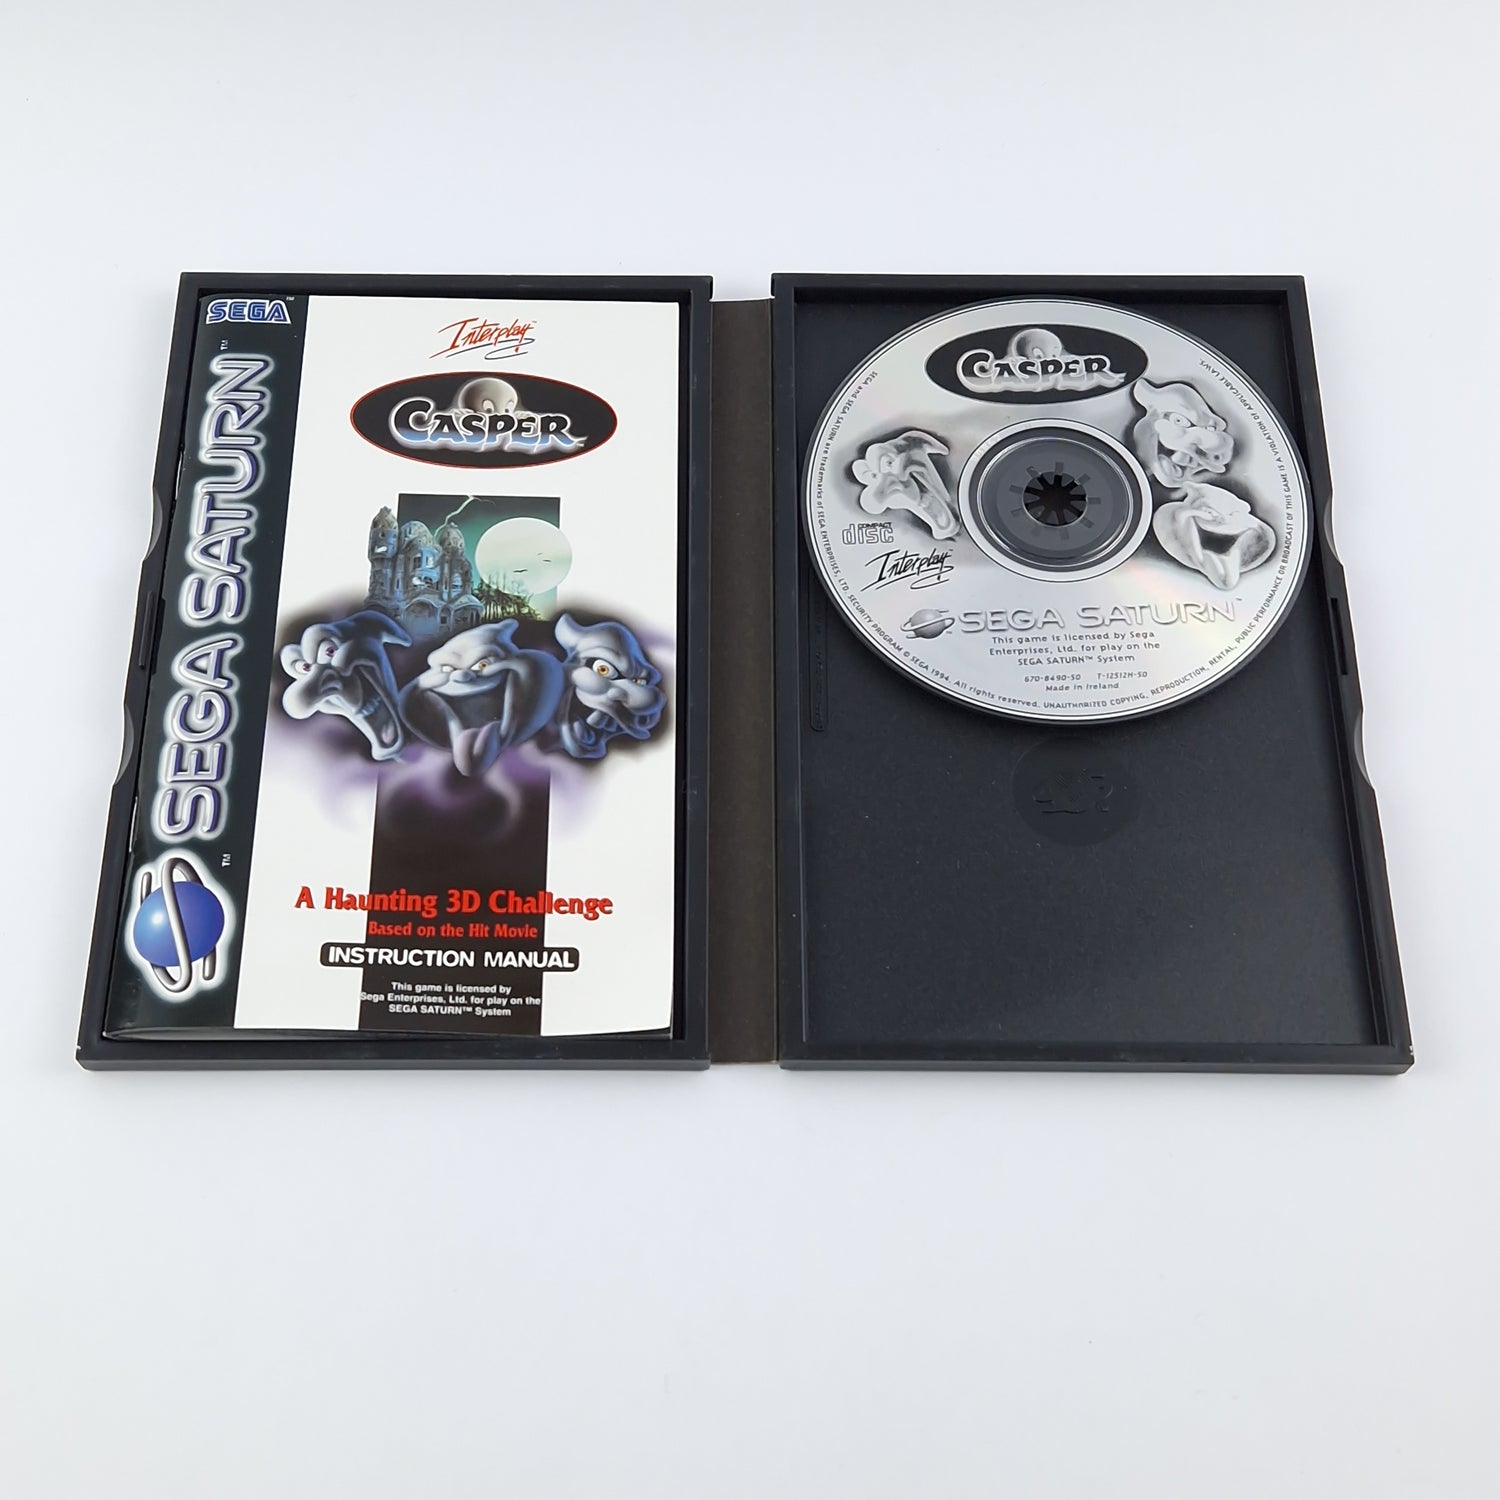 Sega Saturn Game: Casper a Haunting 3D Challenge - OVP Instructions CD PAL Disc